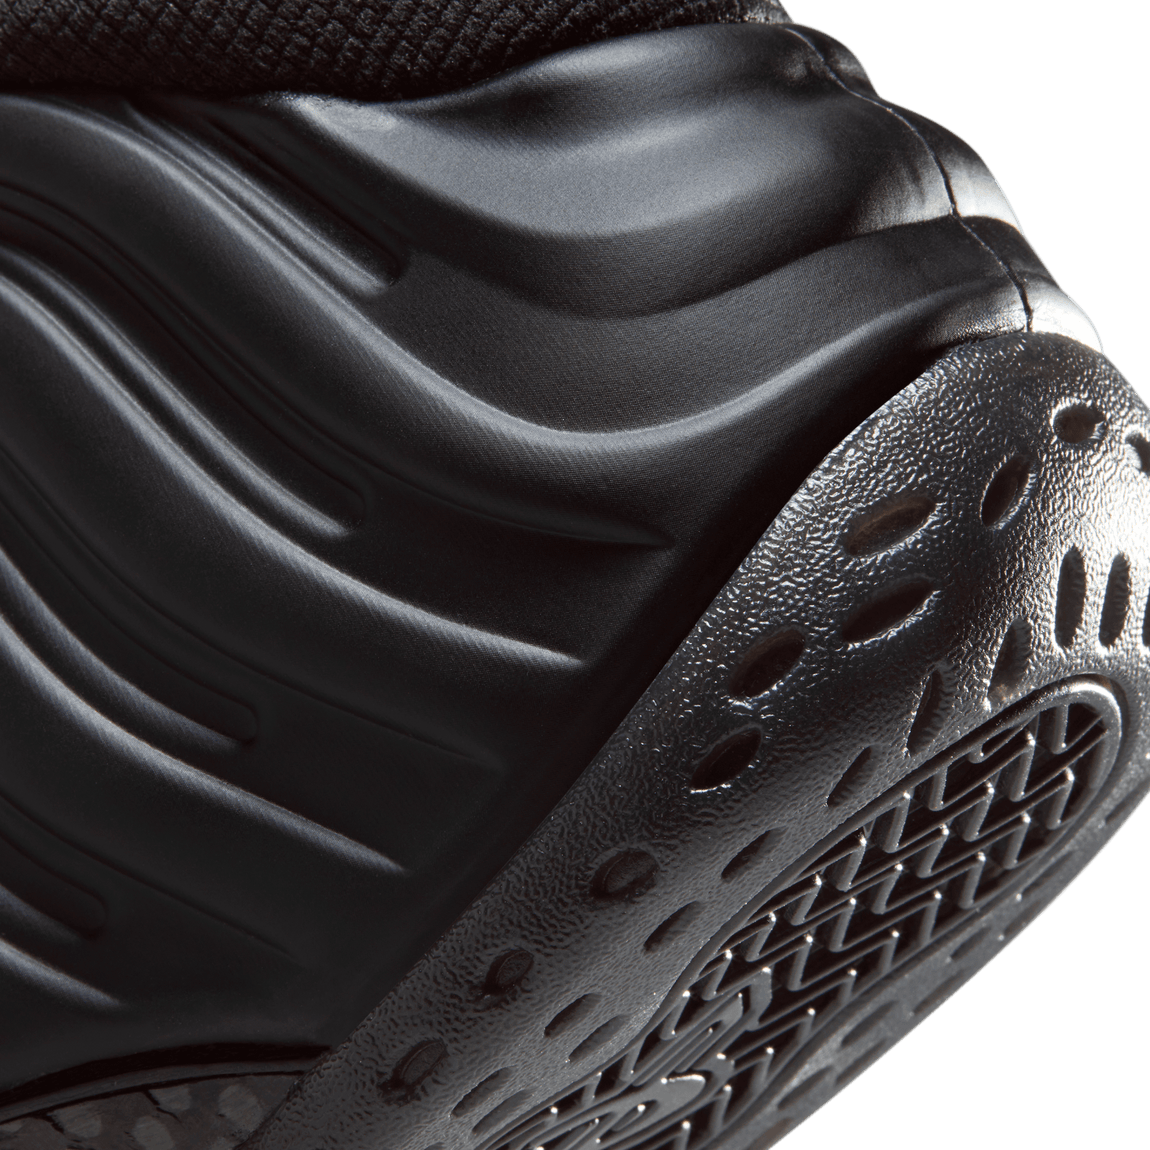 Nike Air Foamposite One (Black/Anthracite-Black) - Nike Air Foamposite One (Black/Anthracite-Black) - 